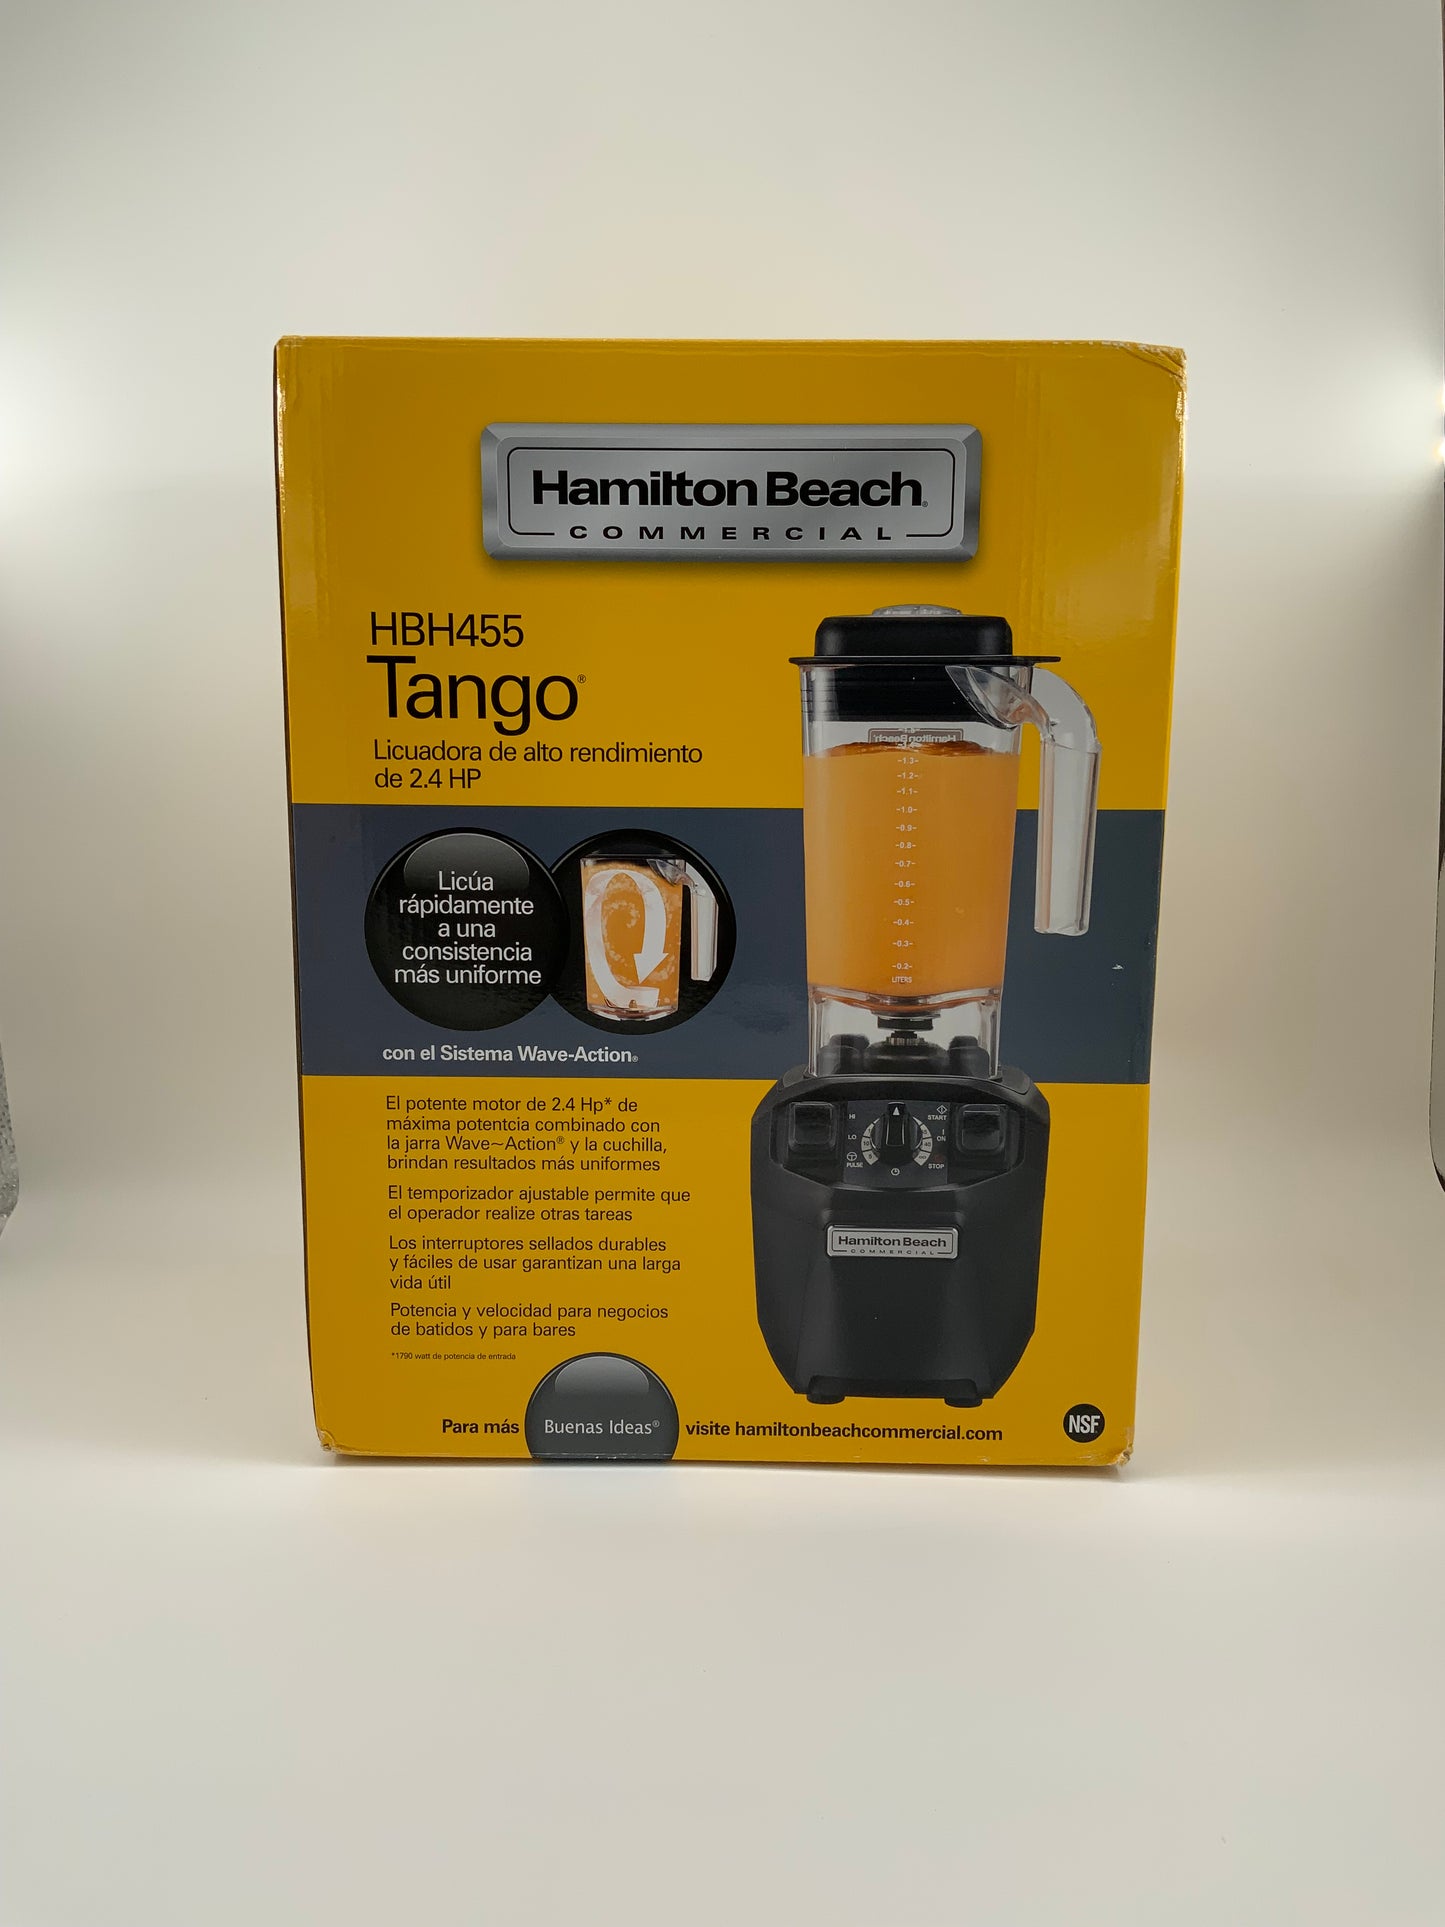 Hamilton Beach Commercial HBH455 Tango 2.4HP Blender